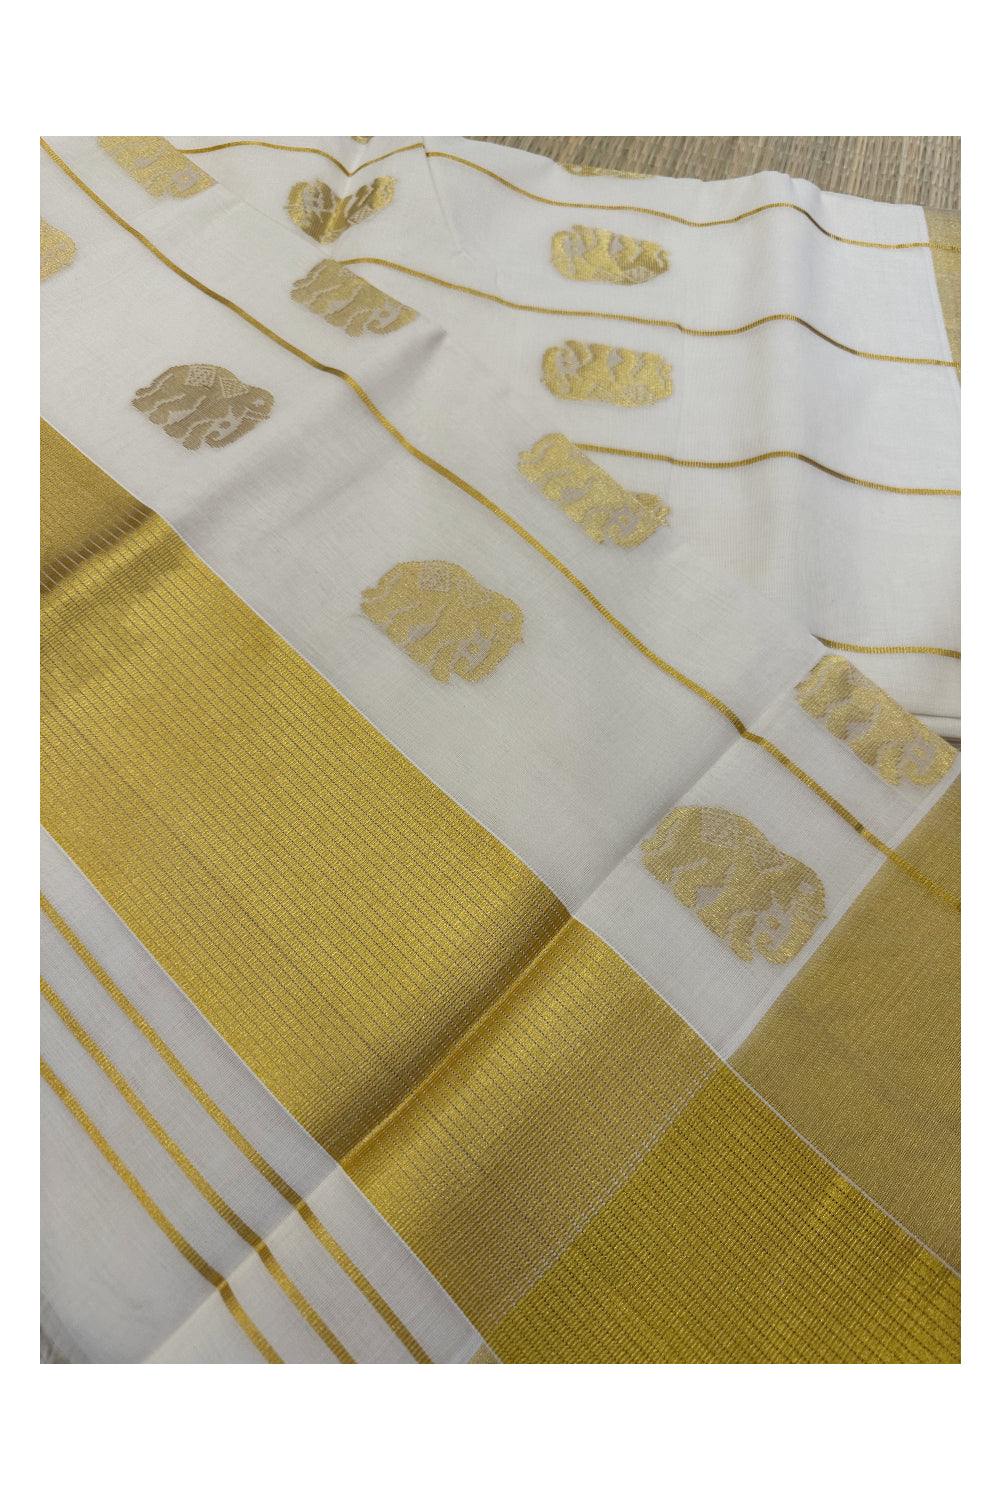 Southloom Premium Handloom Cotton Kasavu Saree with Elephant Woven Designs on Body